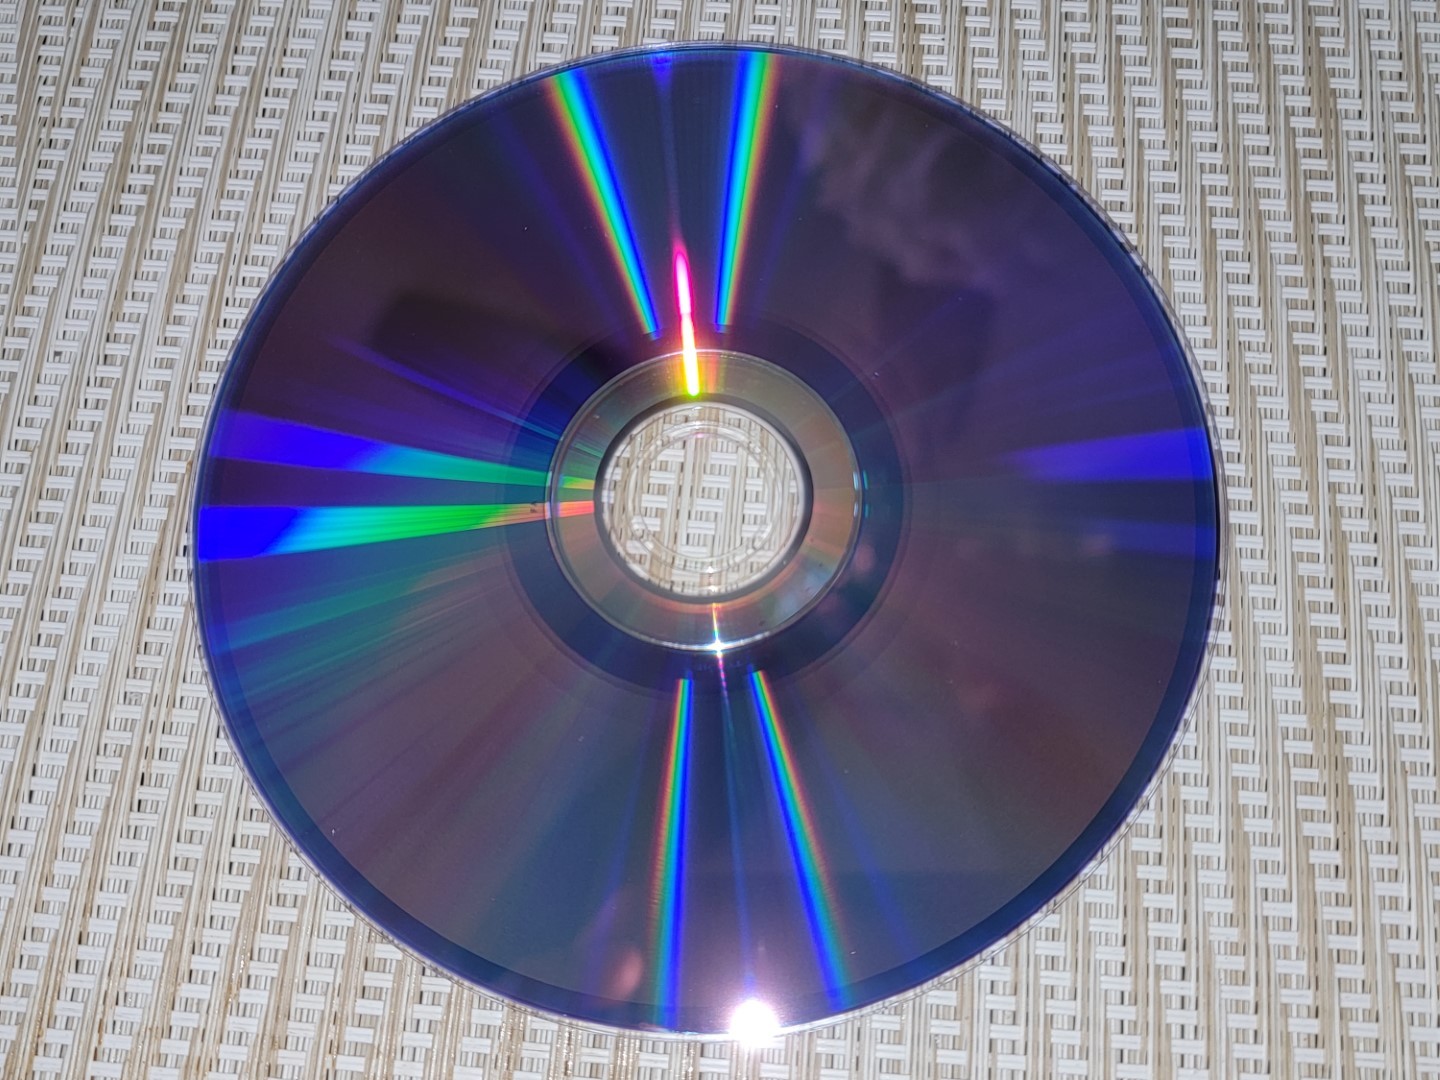 PlexDisc DVD+R Burned in LG BP60NB10 v1.02